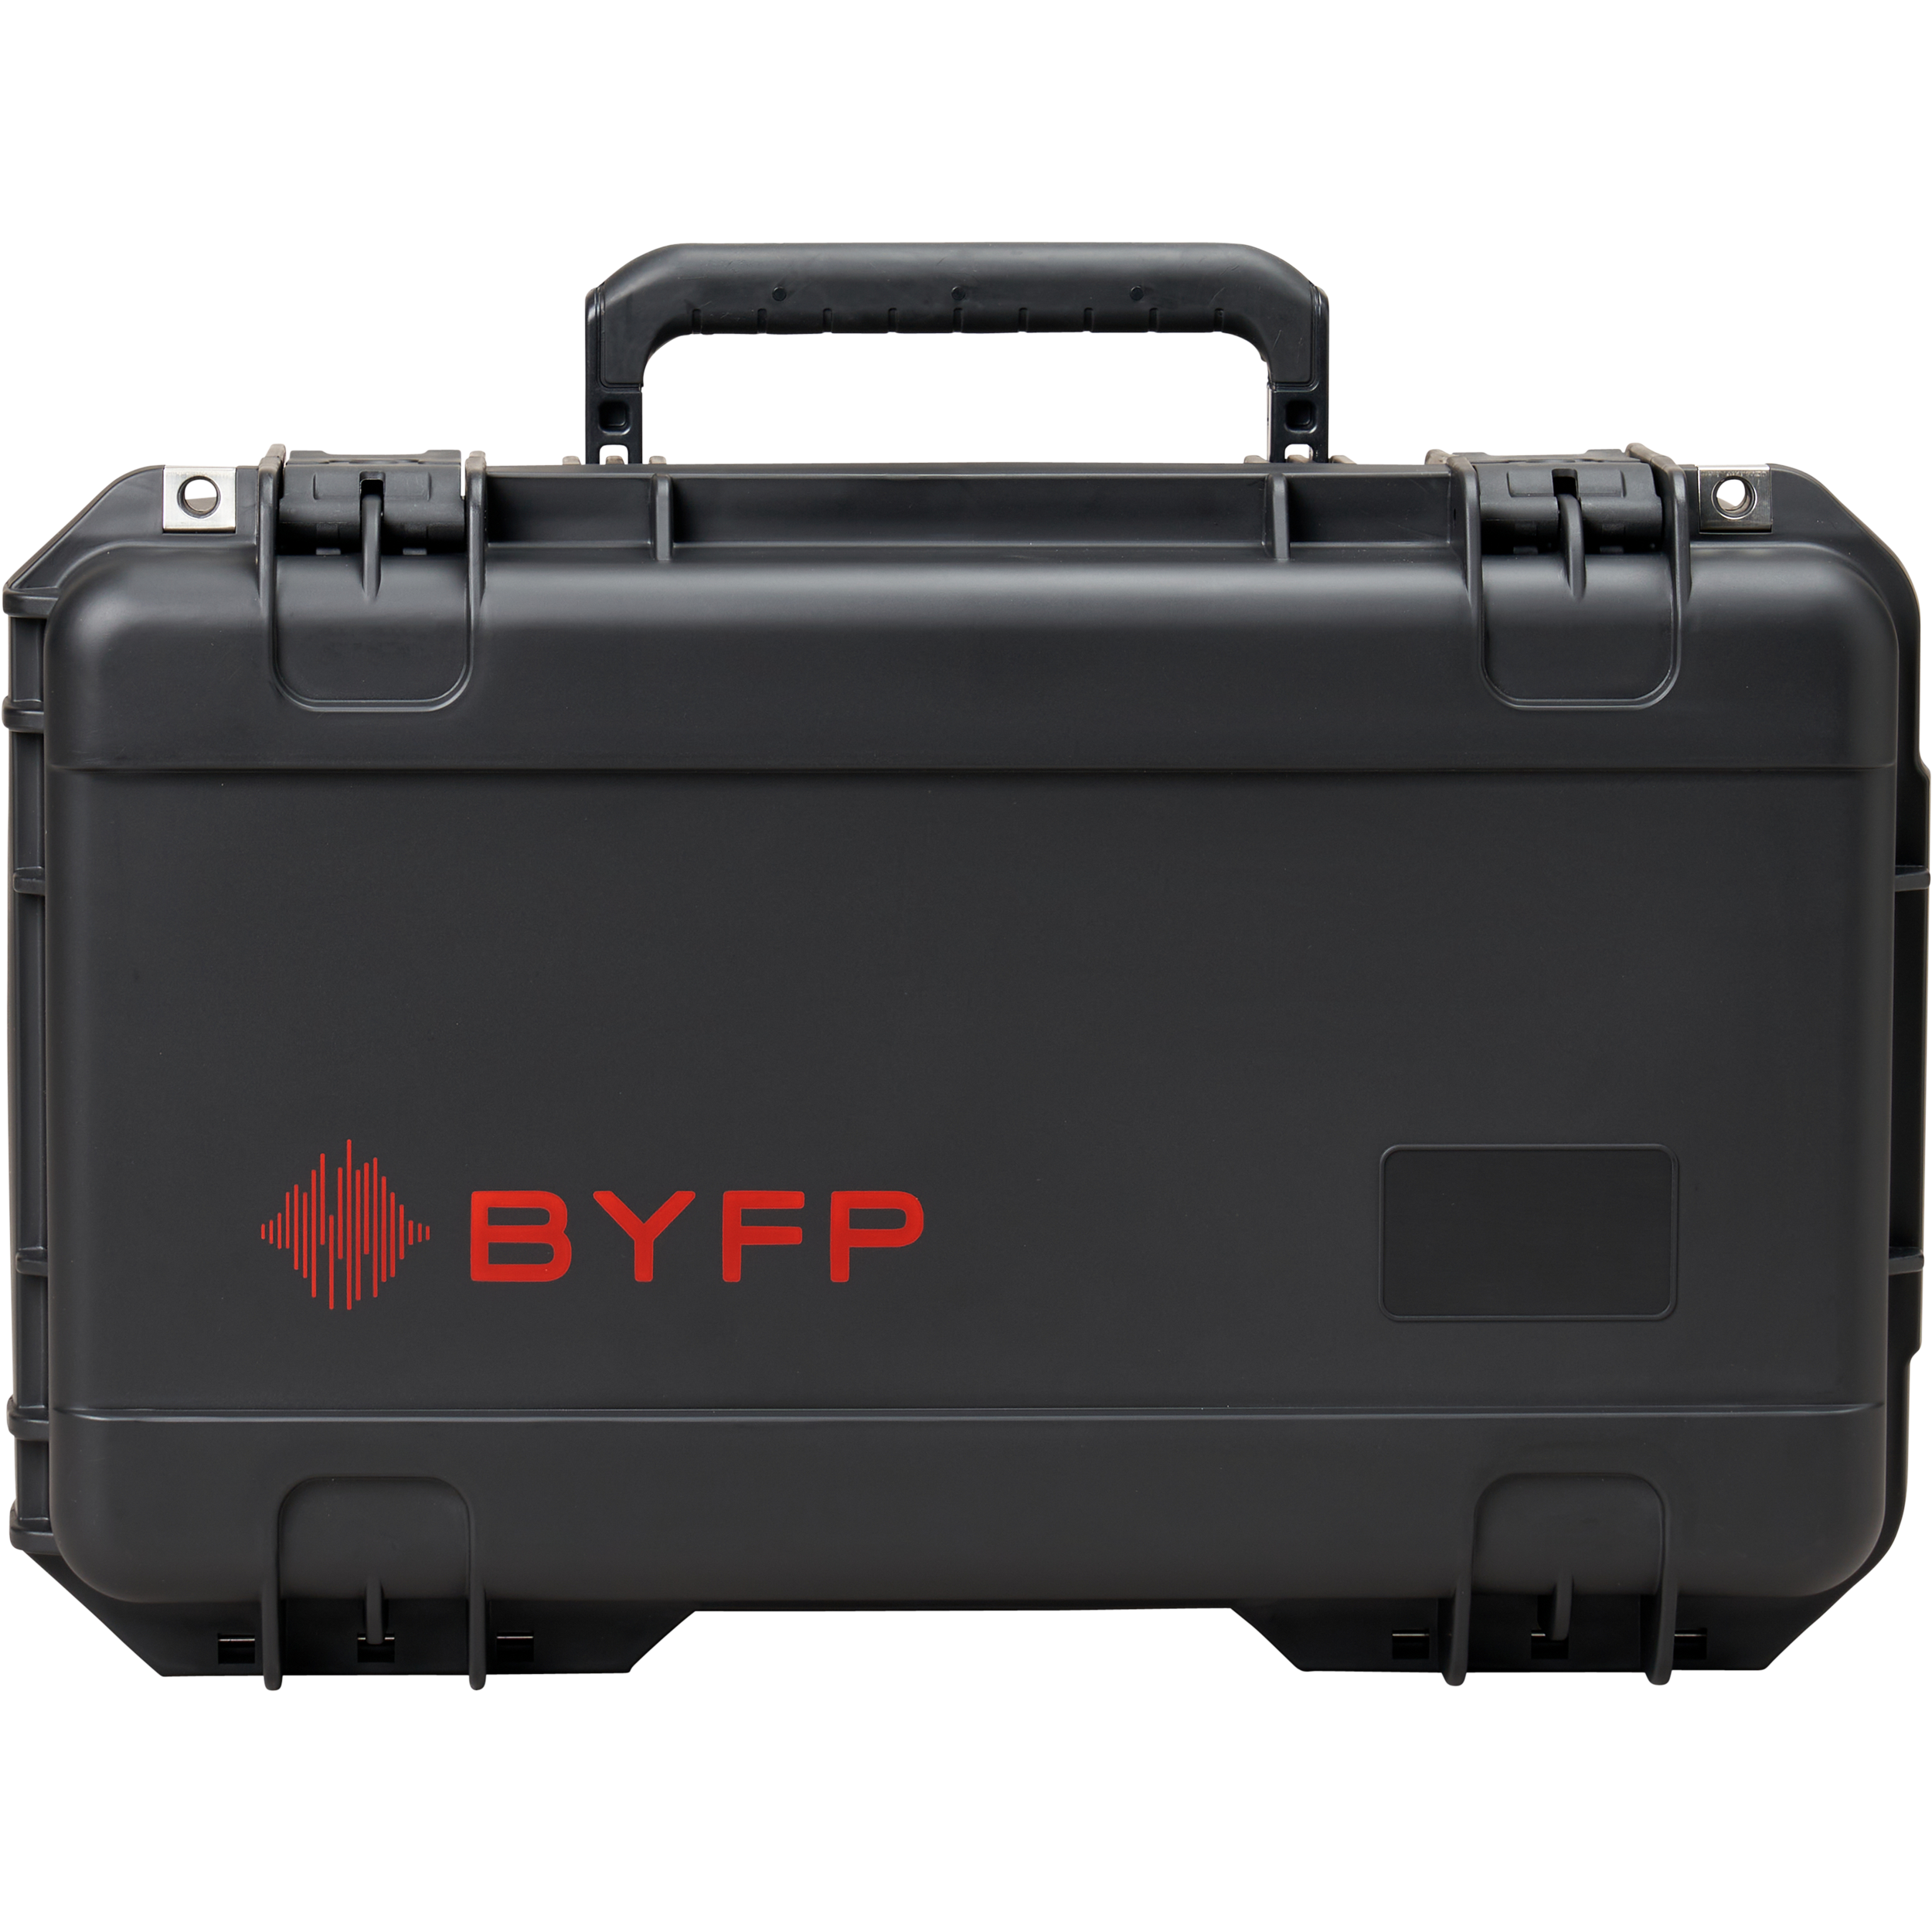 BYFP ipCase for 6x Chauvet D-Fi Hub